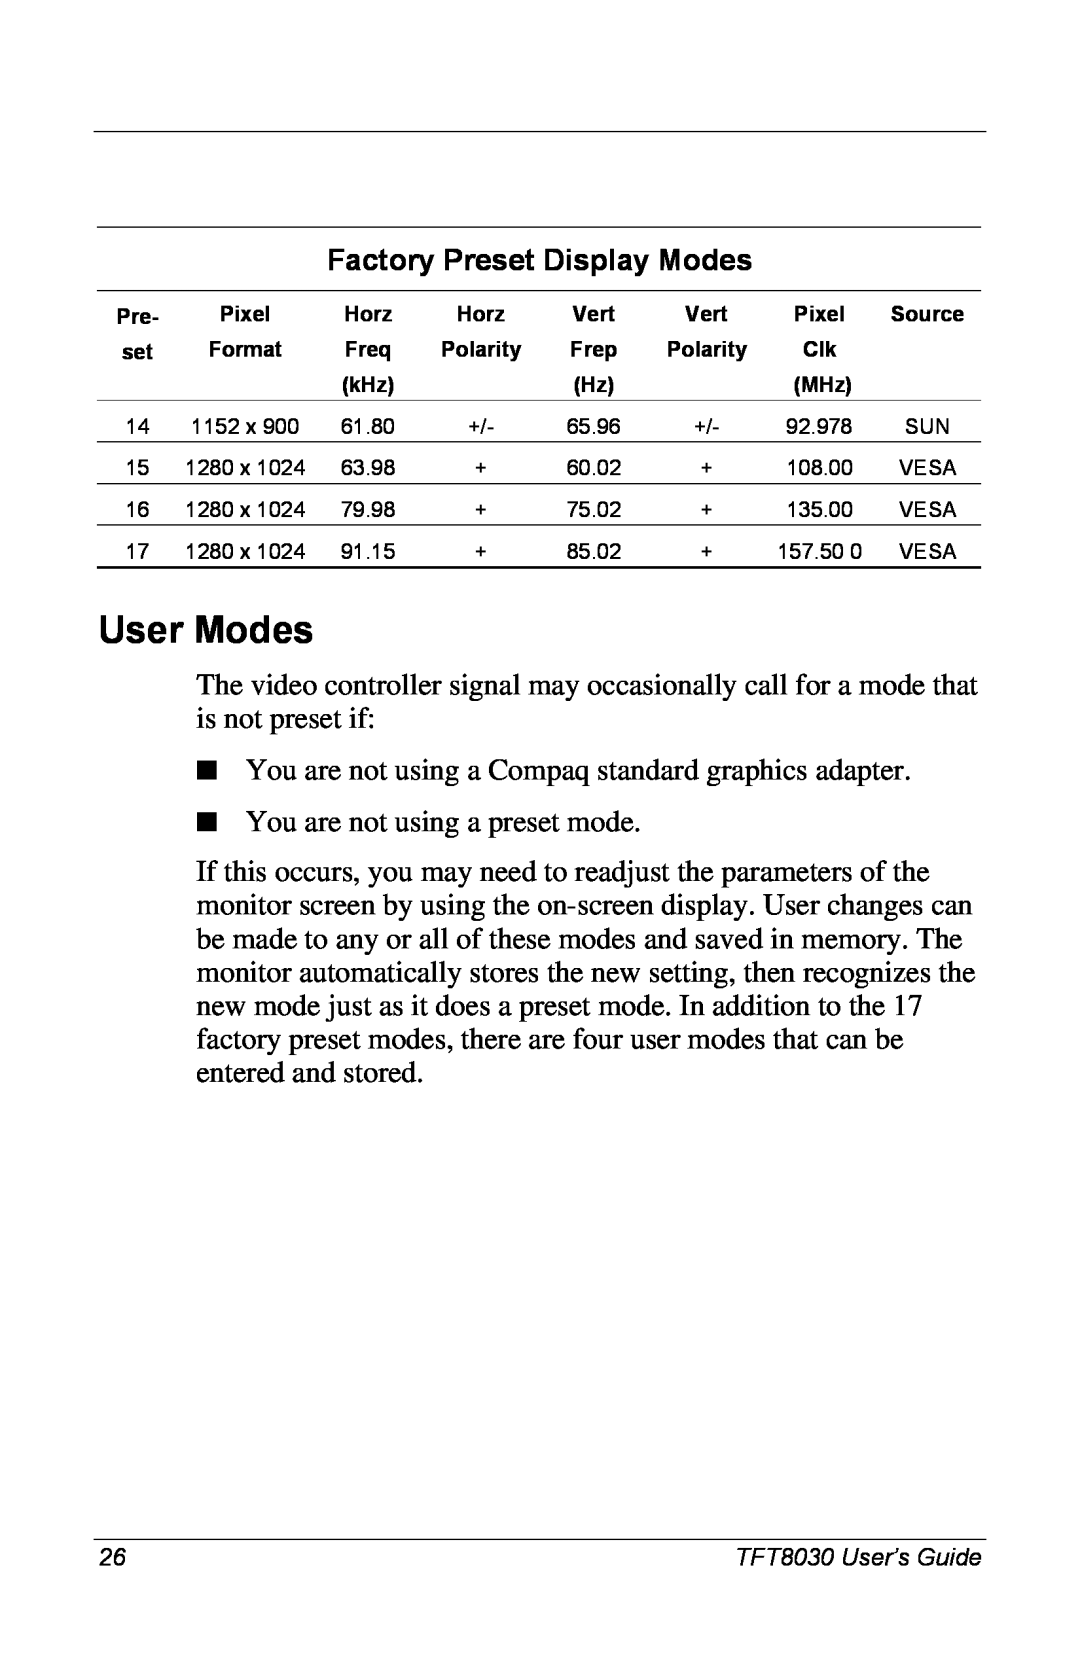 Compaq 8030 manual User Modes, Factory Preset Display Modes 